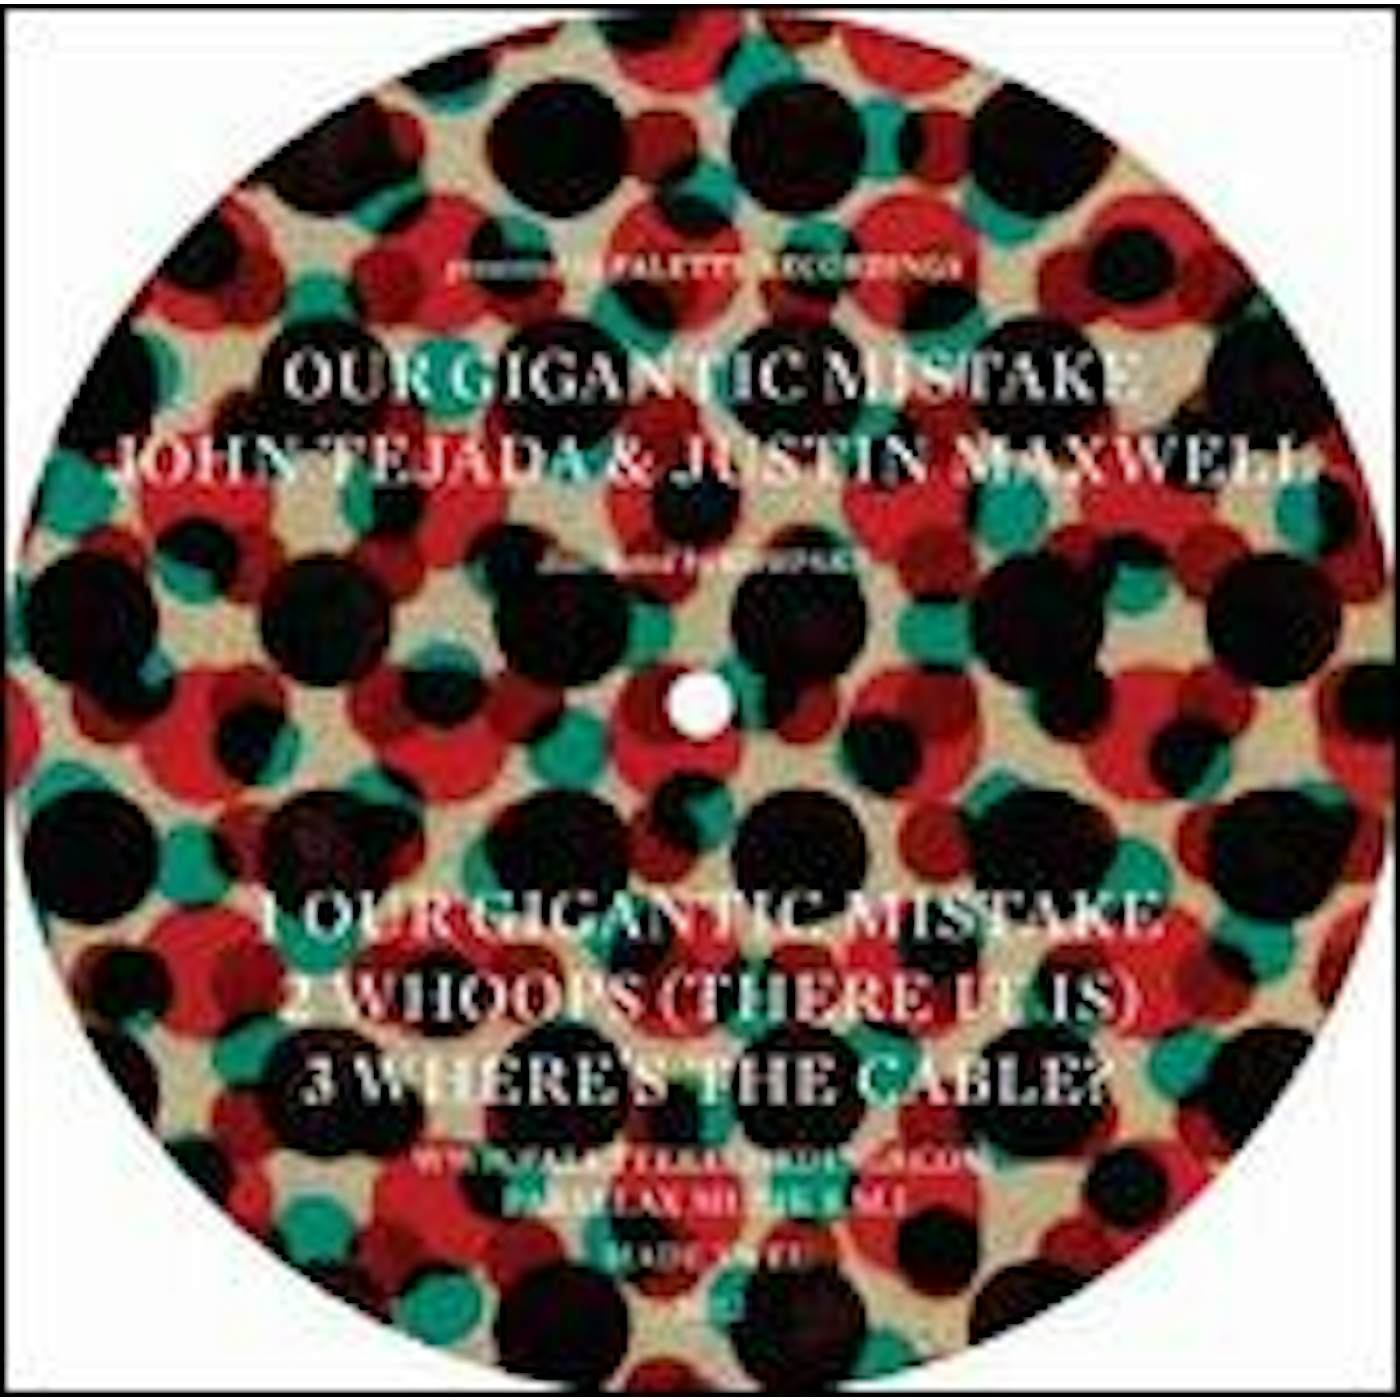 John Tejada & Justin Maxwell OUR GIGANTIC MISTAKE Vinyl Record